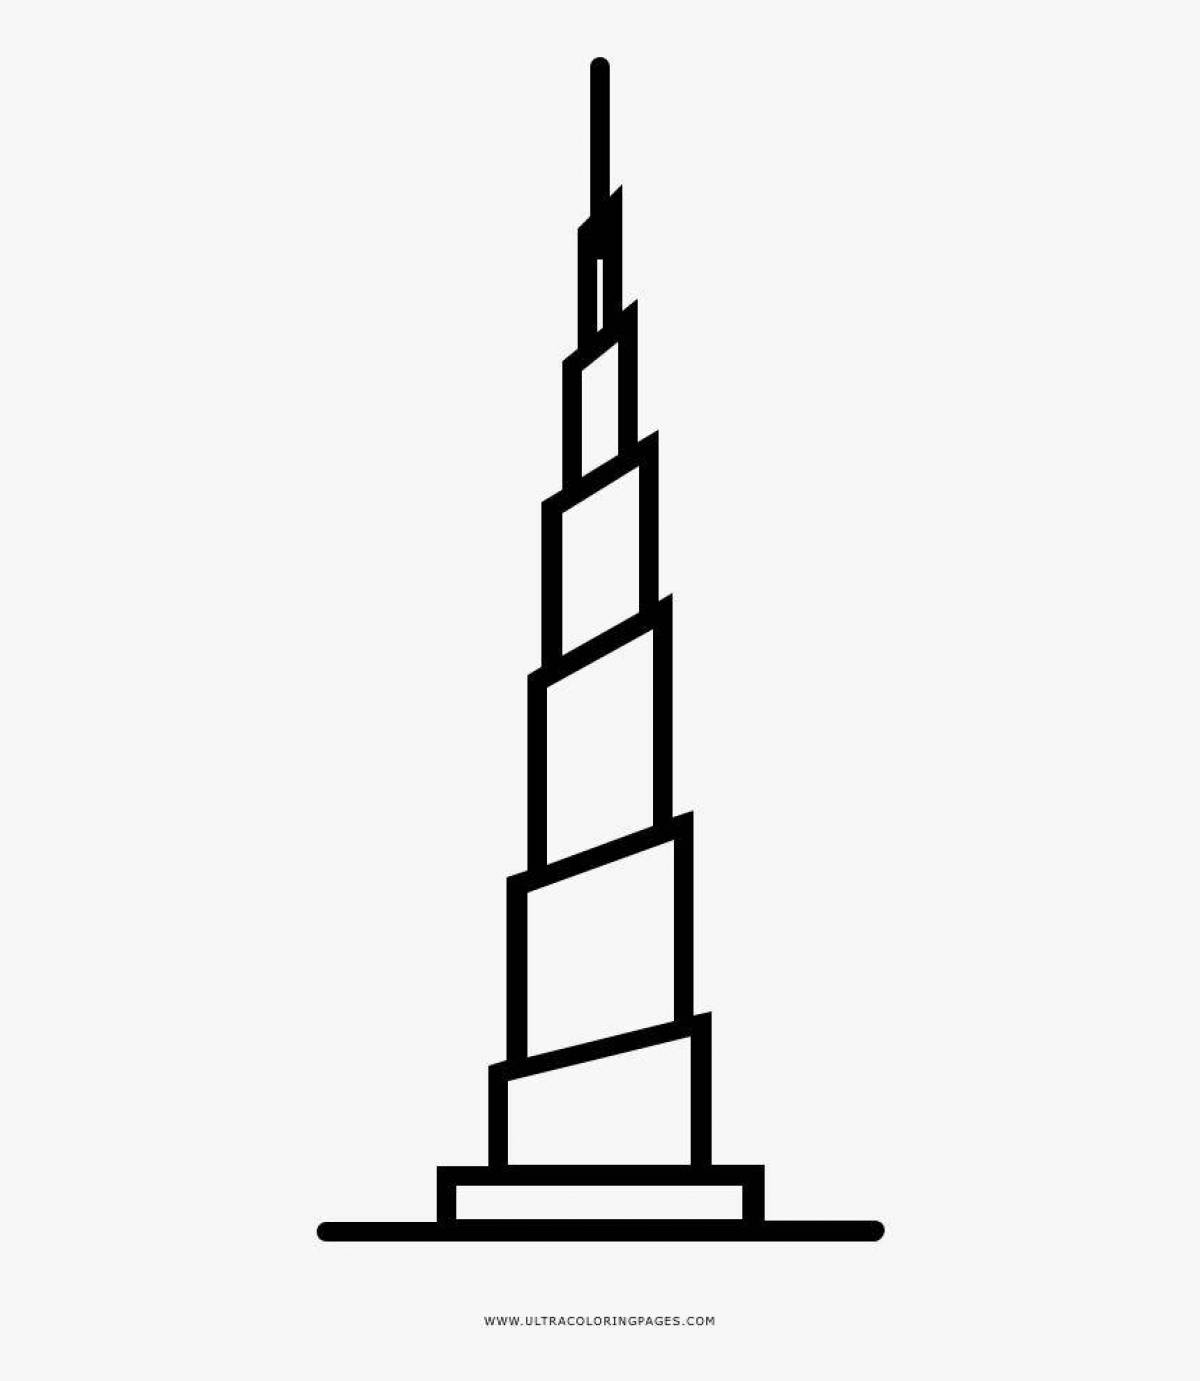 Dazzling Burj Khalifa coloring book